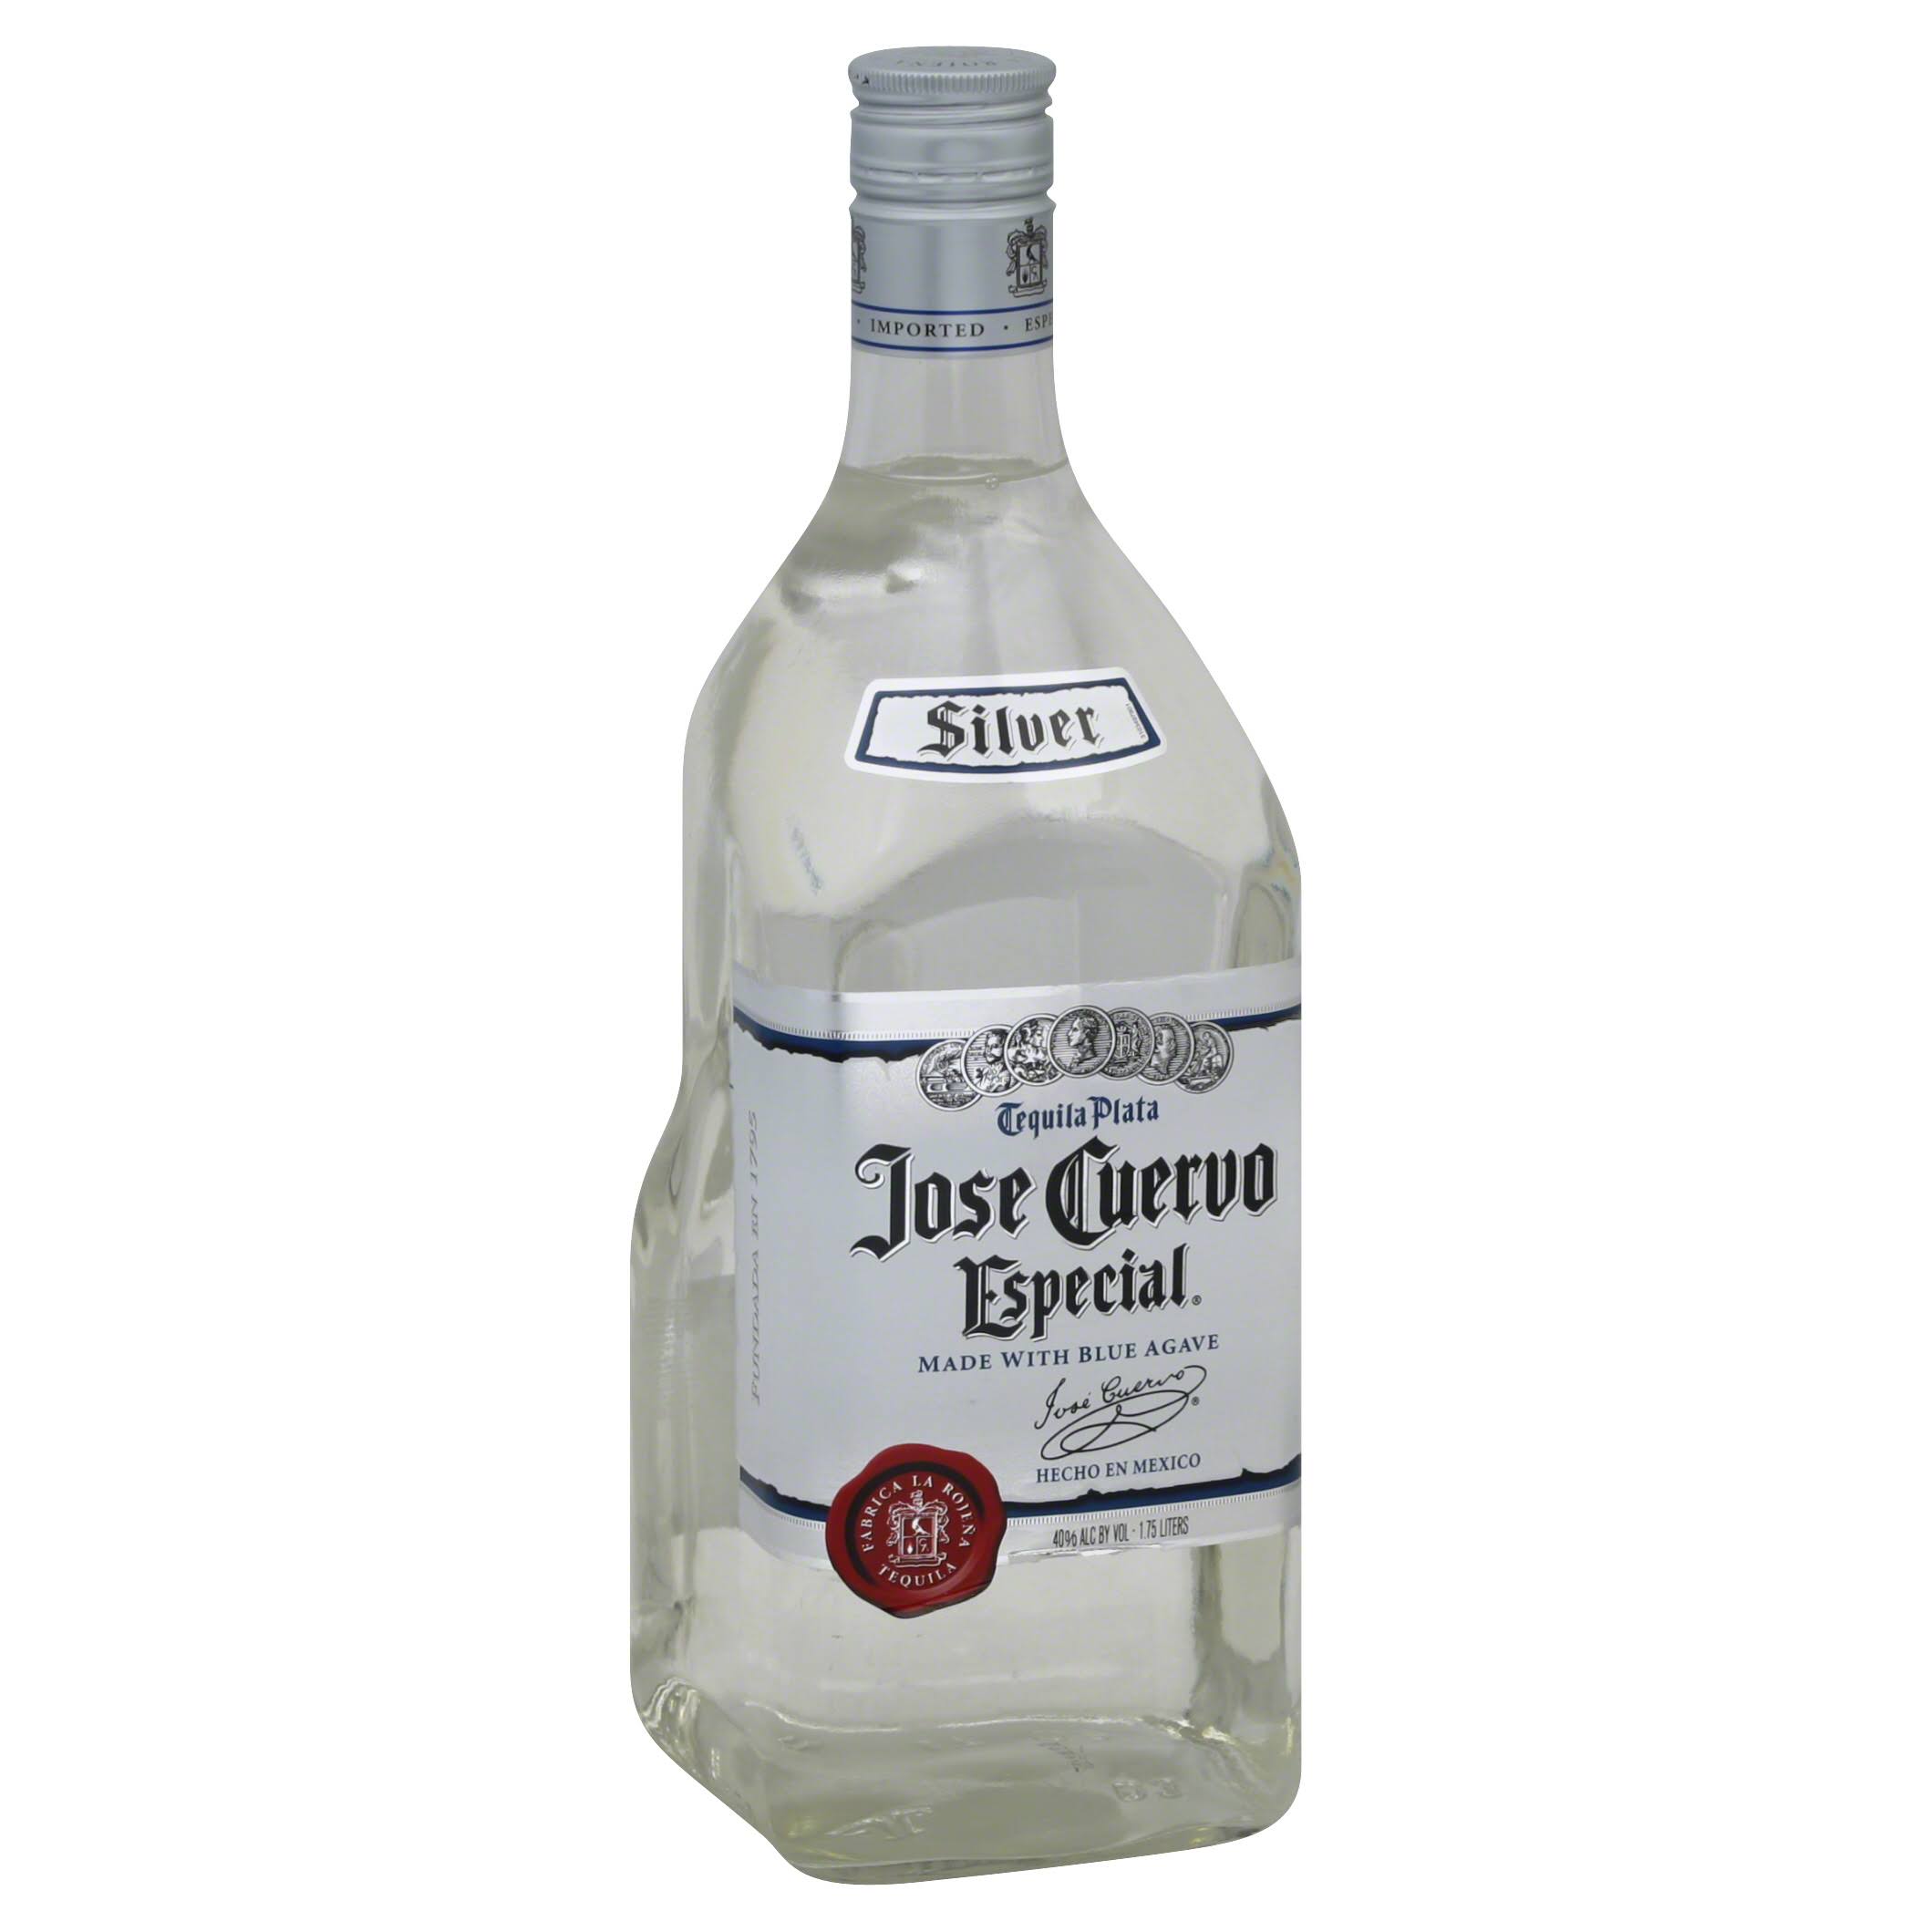 Jose Cuervo Especial Tequila, Silver, Blue Agave - 1.75 l